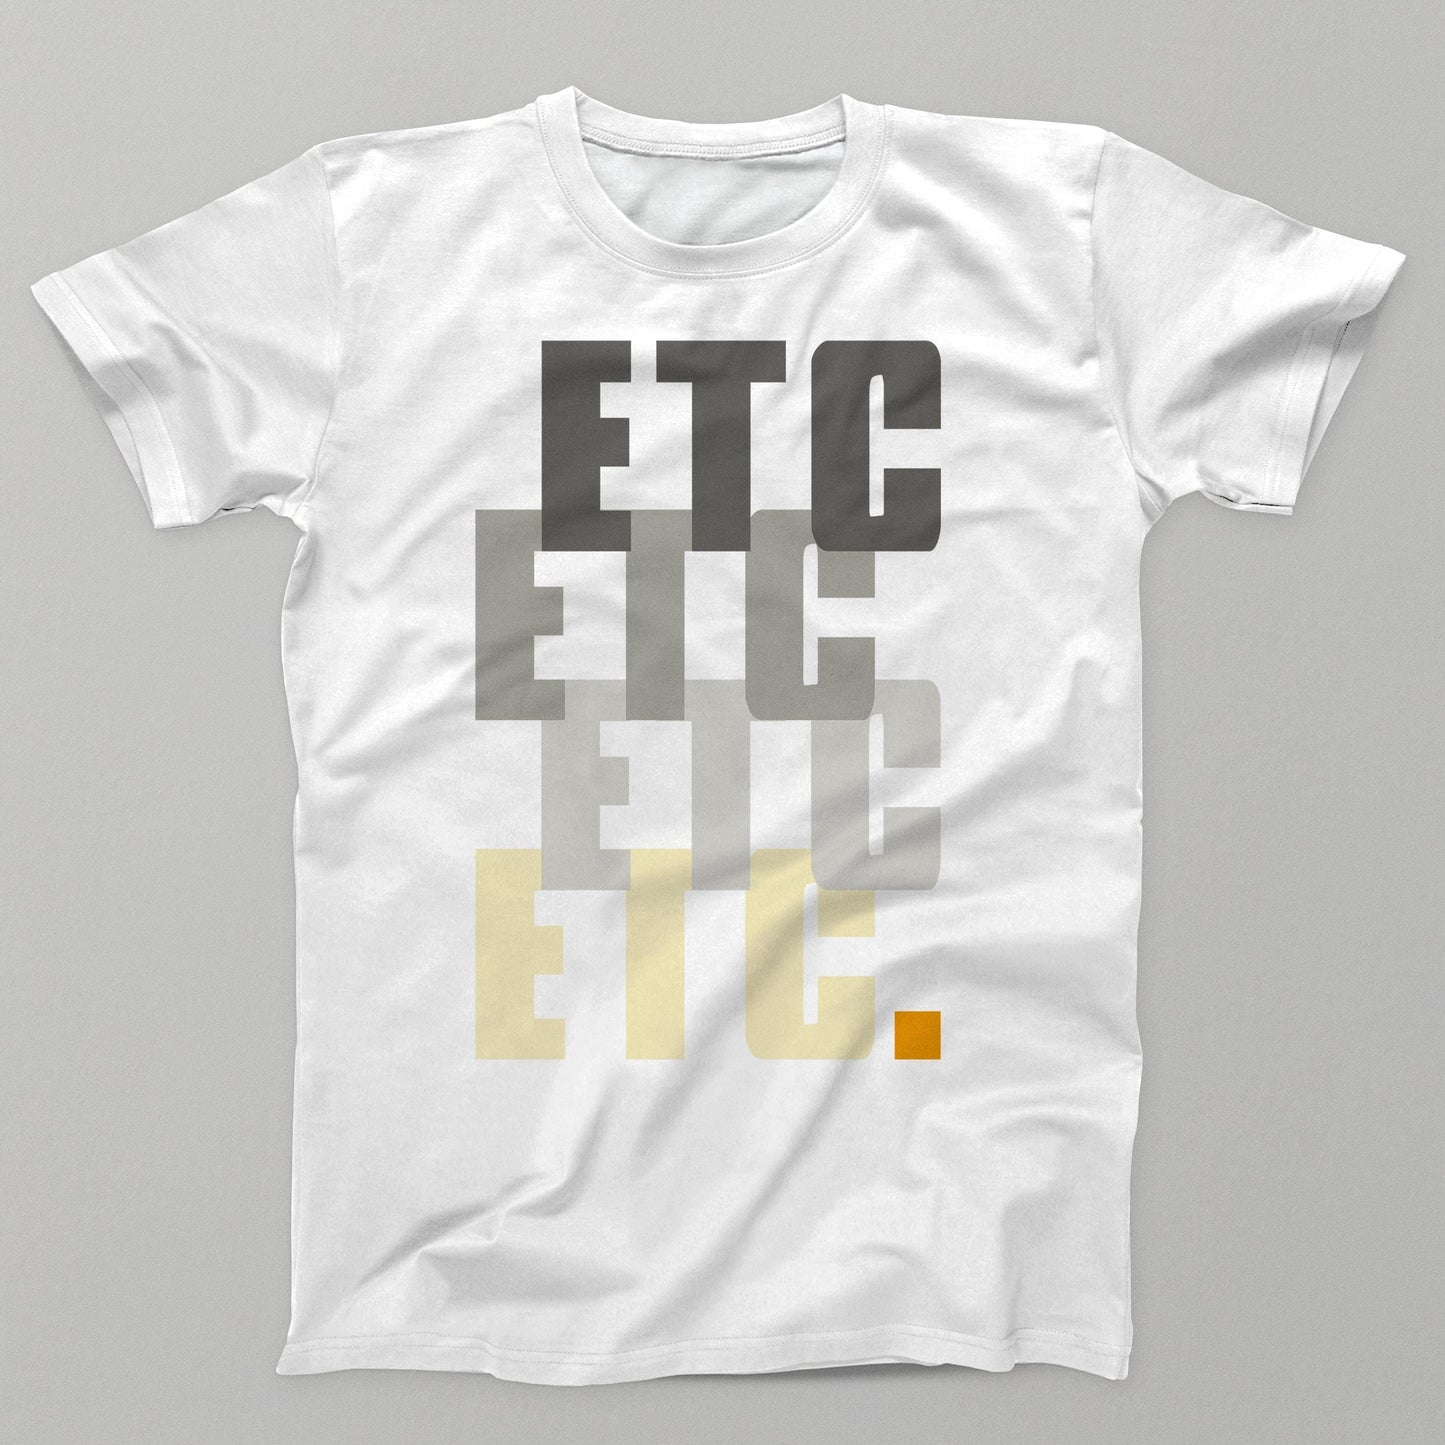 ETC... Men's/Unisex T-Shirt T-shirt by DIRT & GLORY